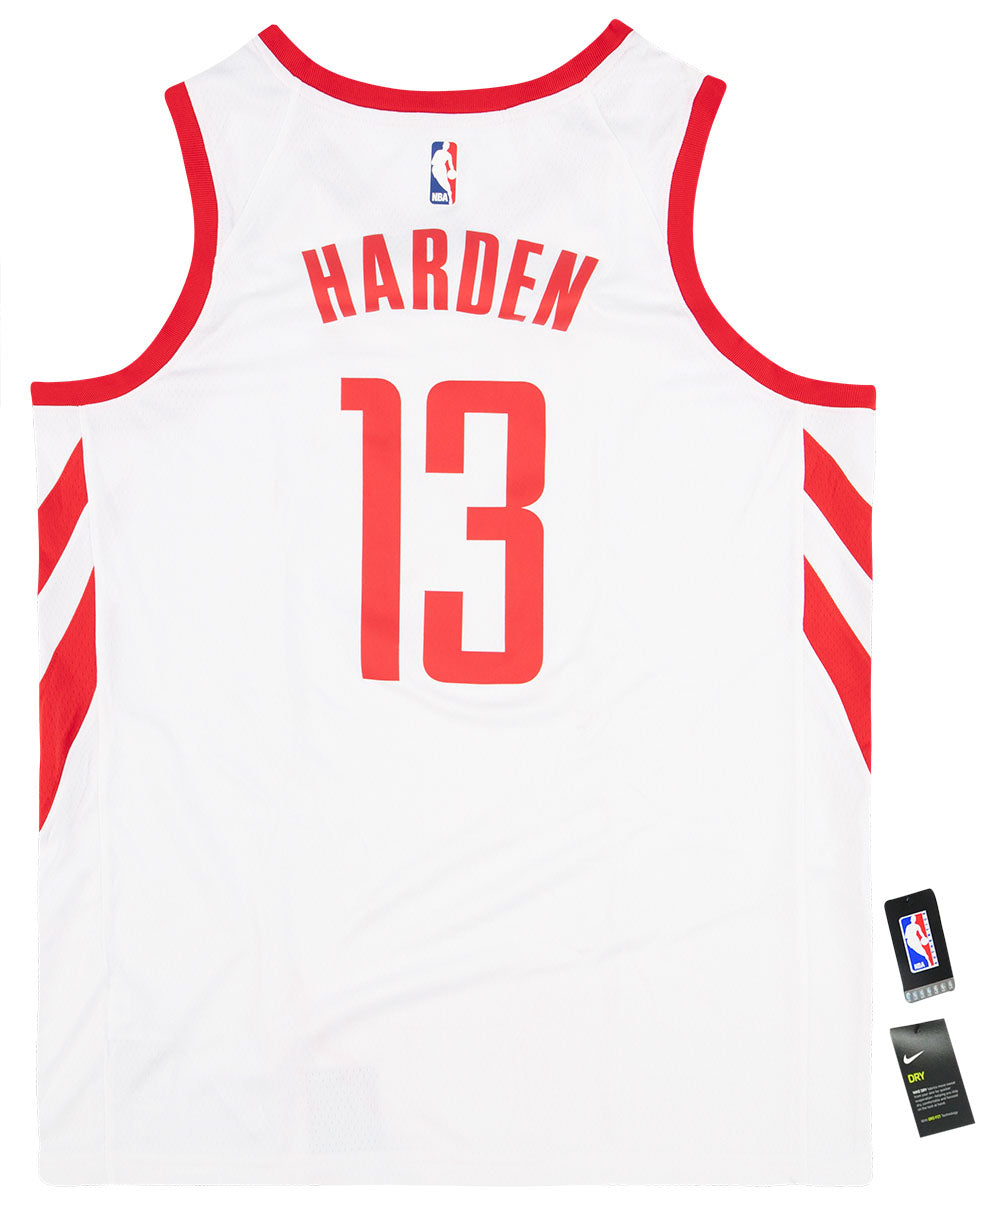 James Harden #13 Houston Rockets Jersey